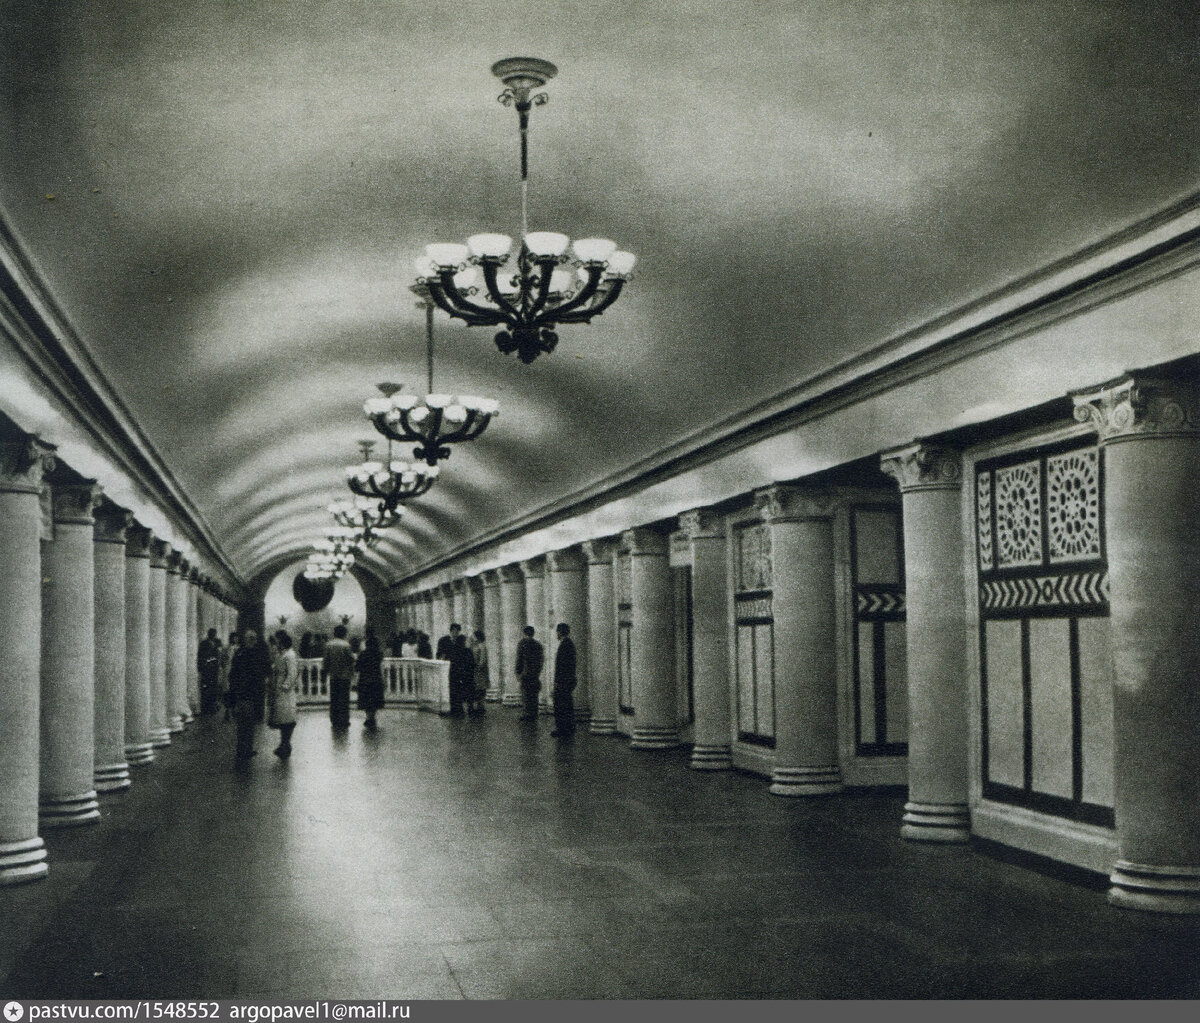 Метро Павелецкая. Центральный зал новой галереи 1888. Станция павелецкая кольцевая